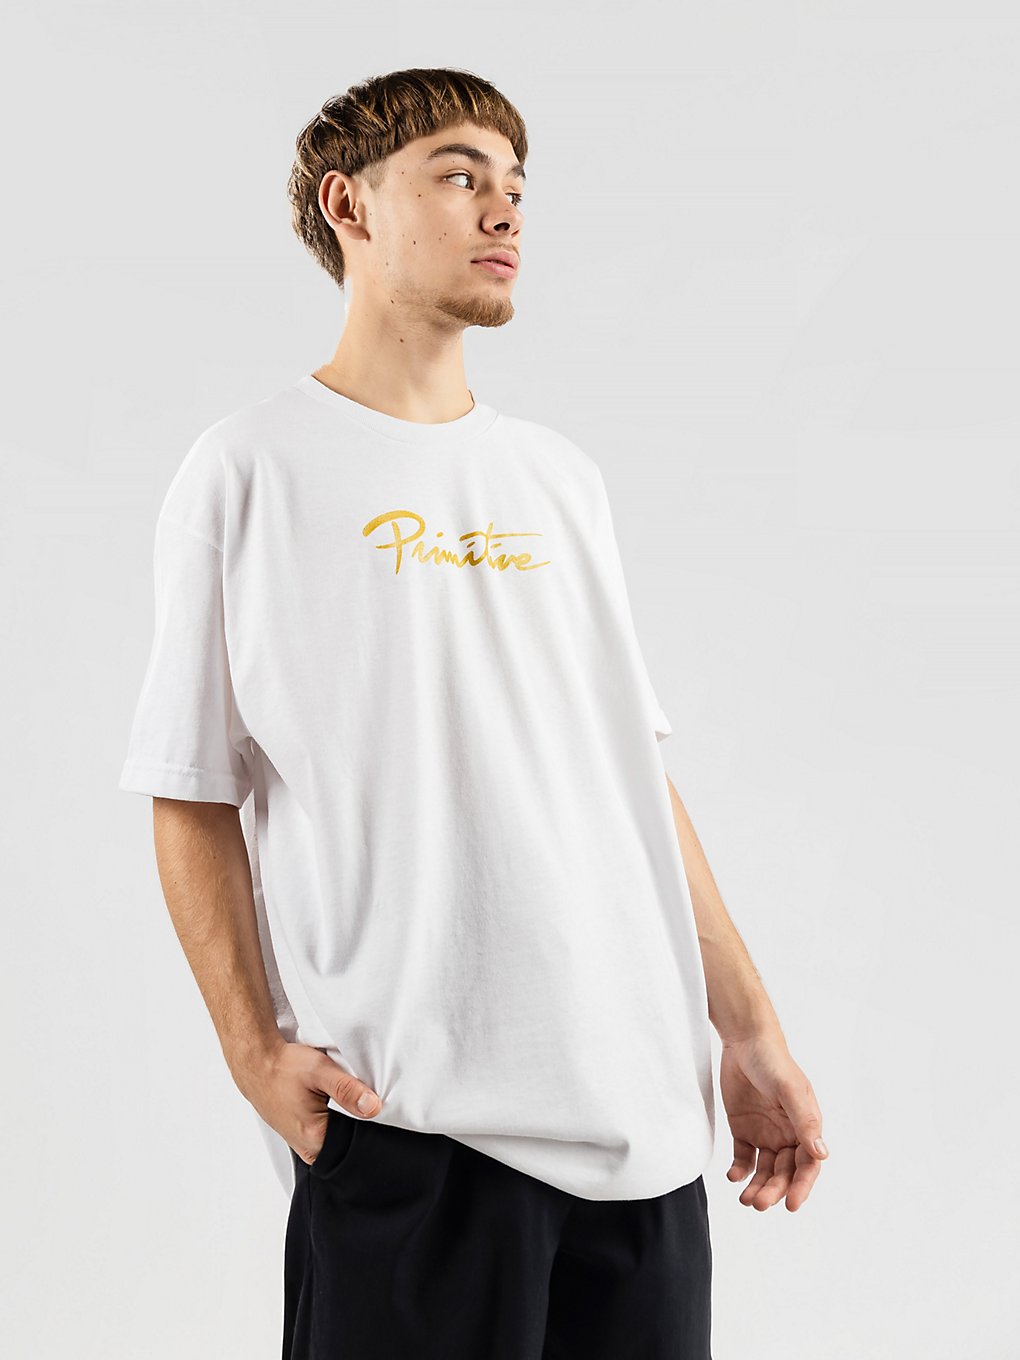 Primitive X Tupac Praise T-Shirt white kaufen